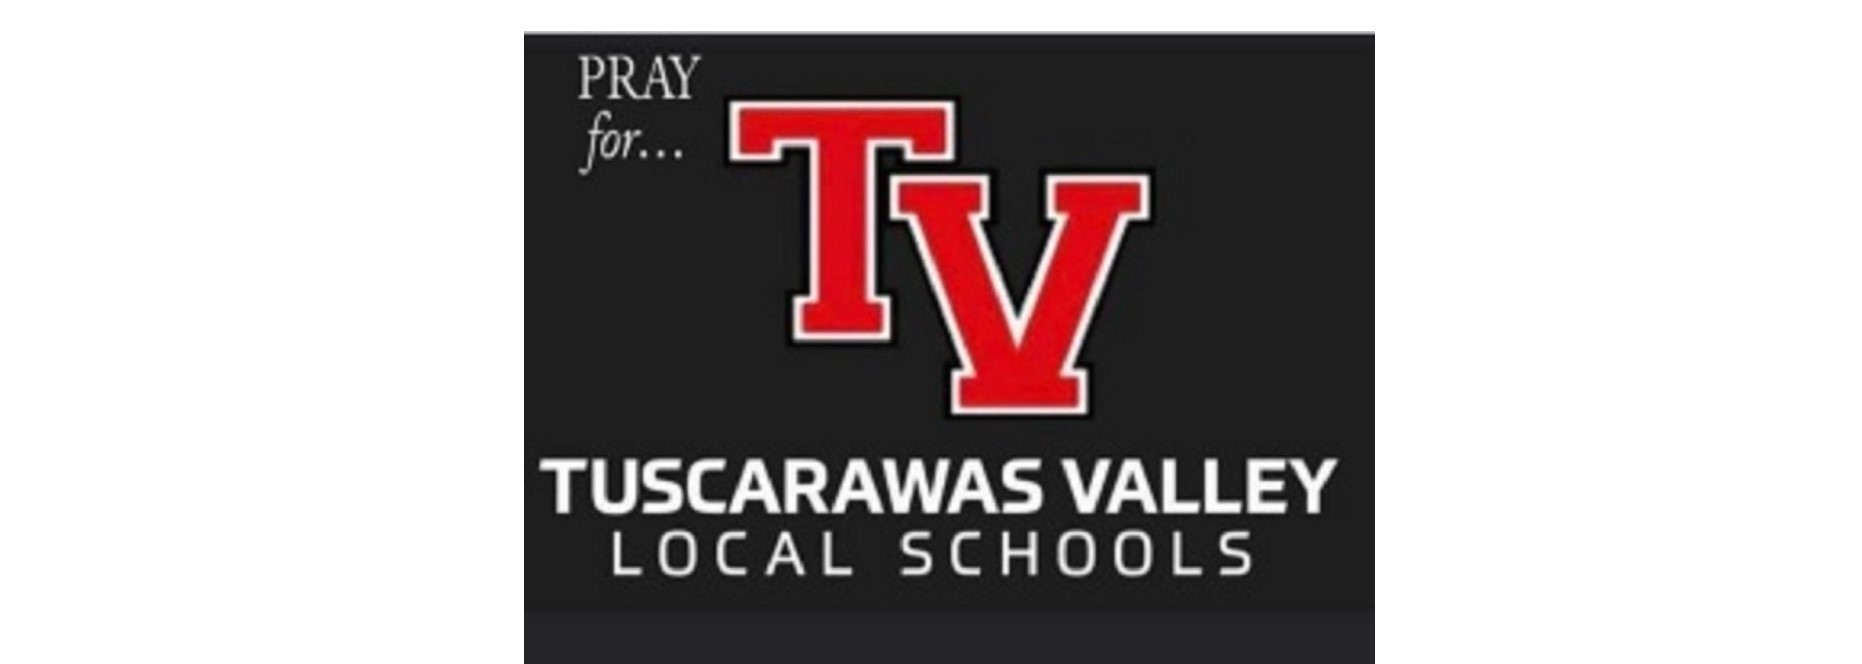 Pray For TV Schools